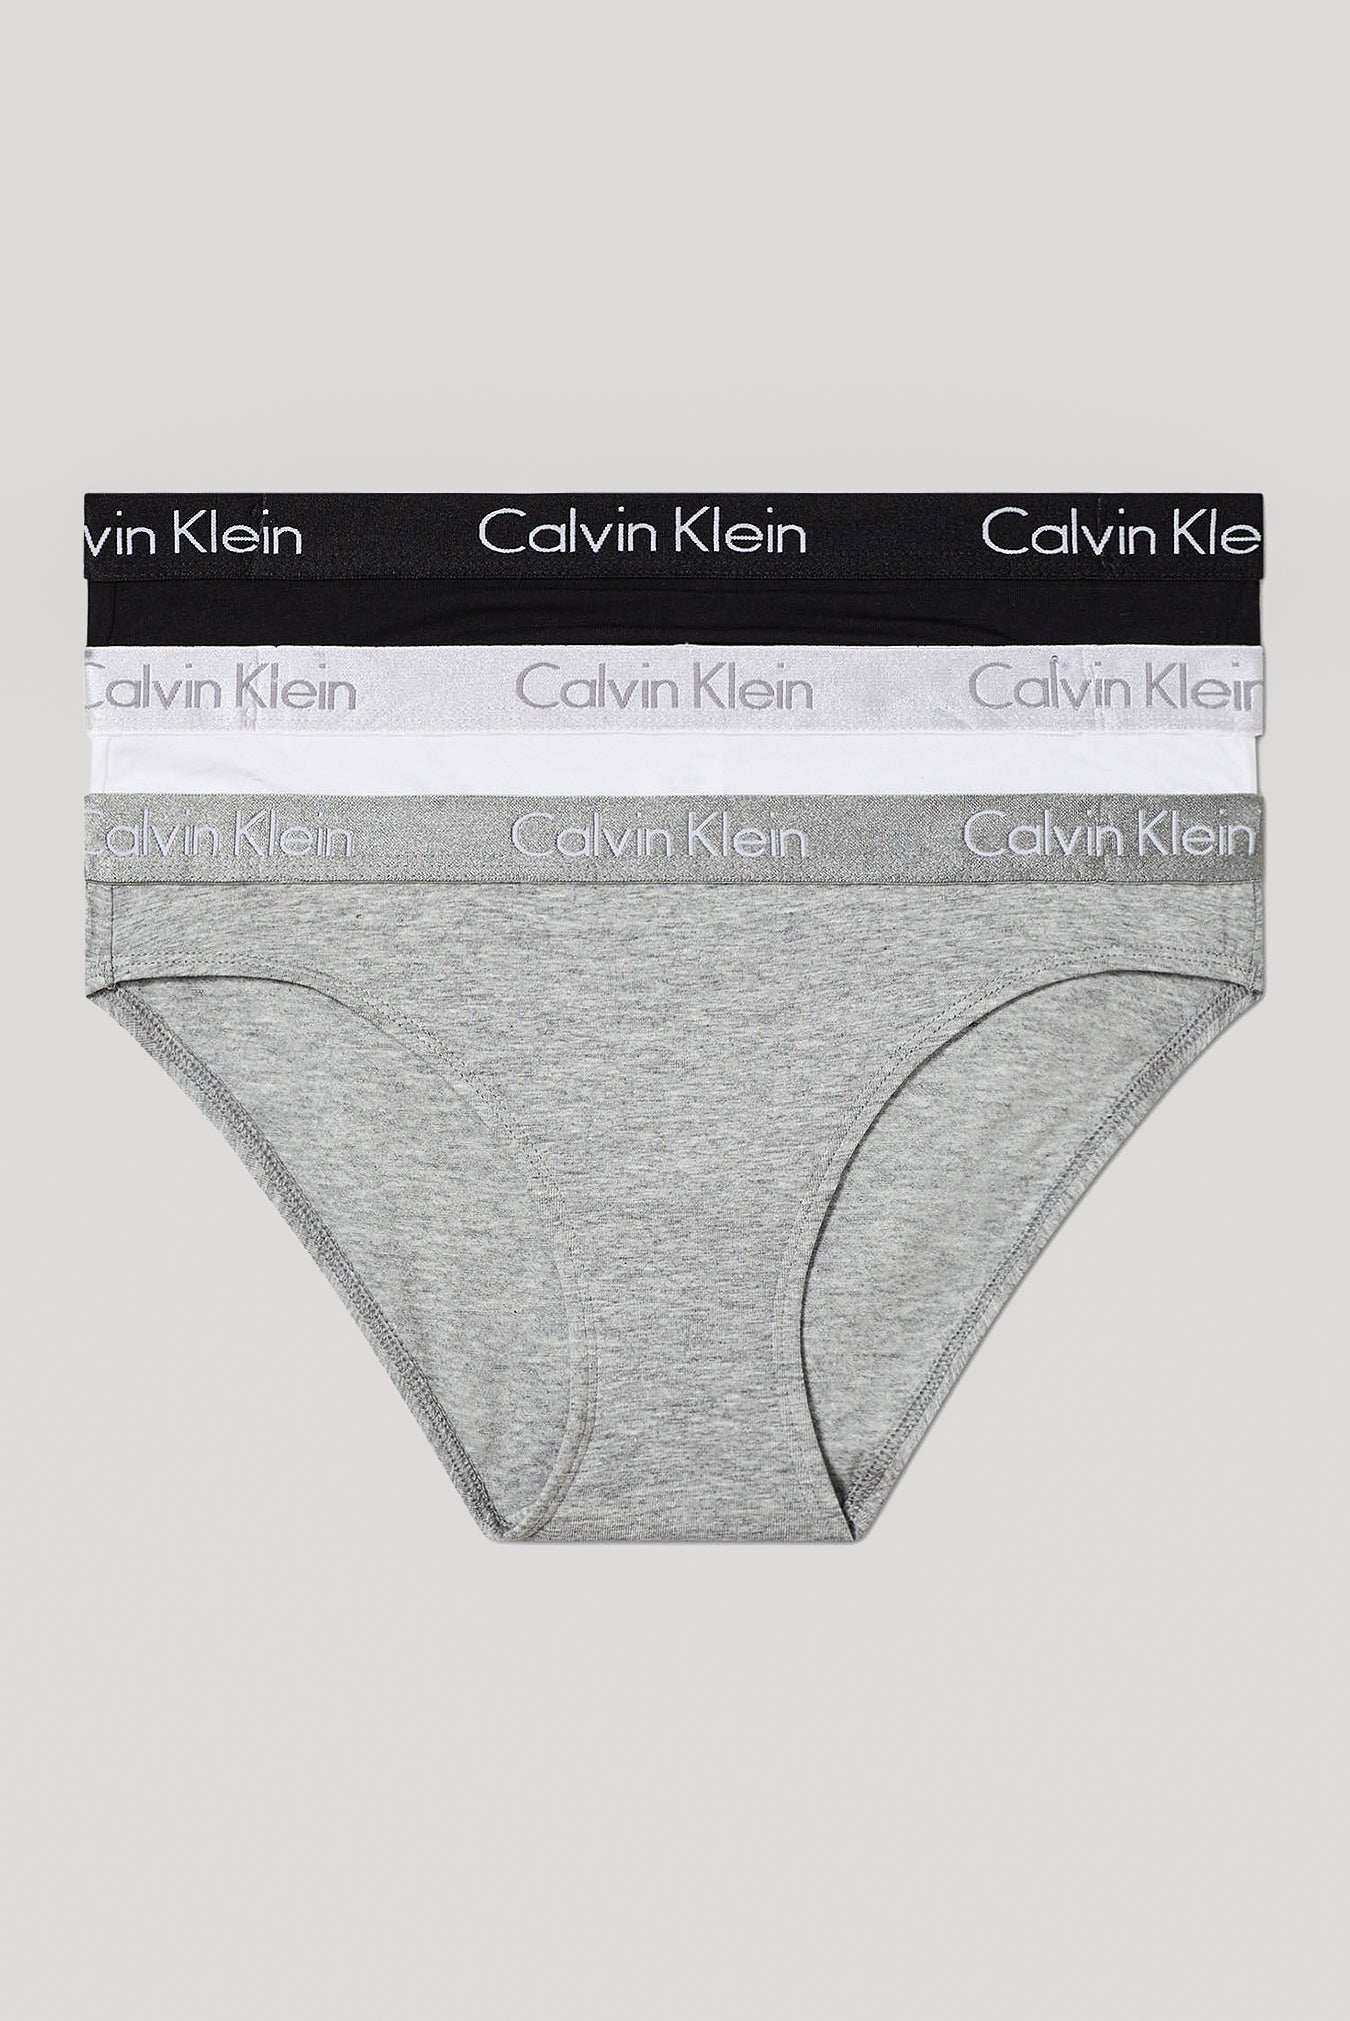 OO  Calvin Klein Underwear Calvin Klein Women's Cotton Motive Thong 3Pk -  Black/ White/ Grey Heather